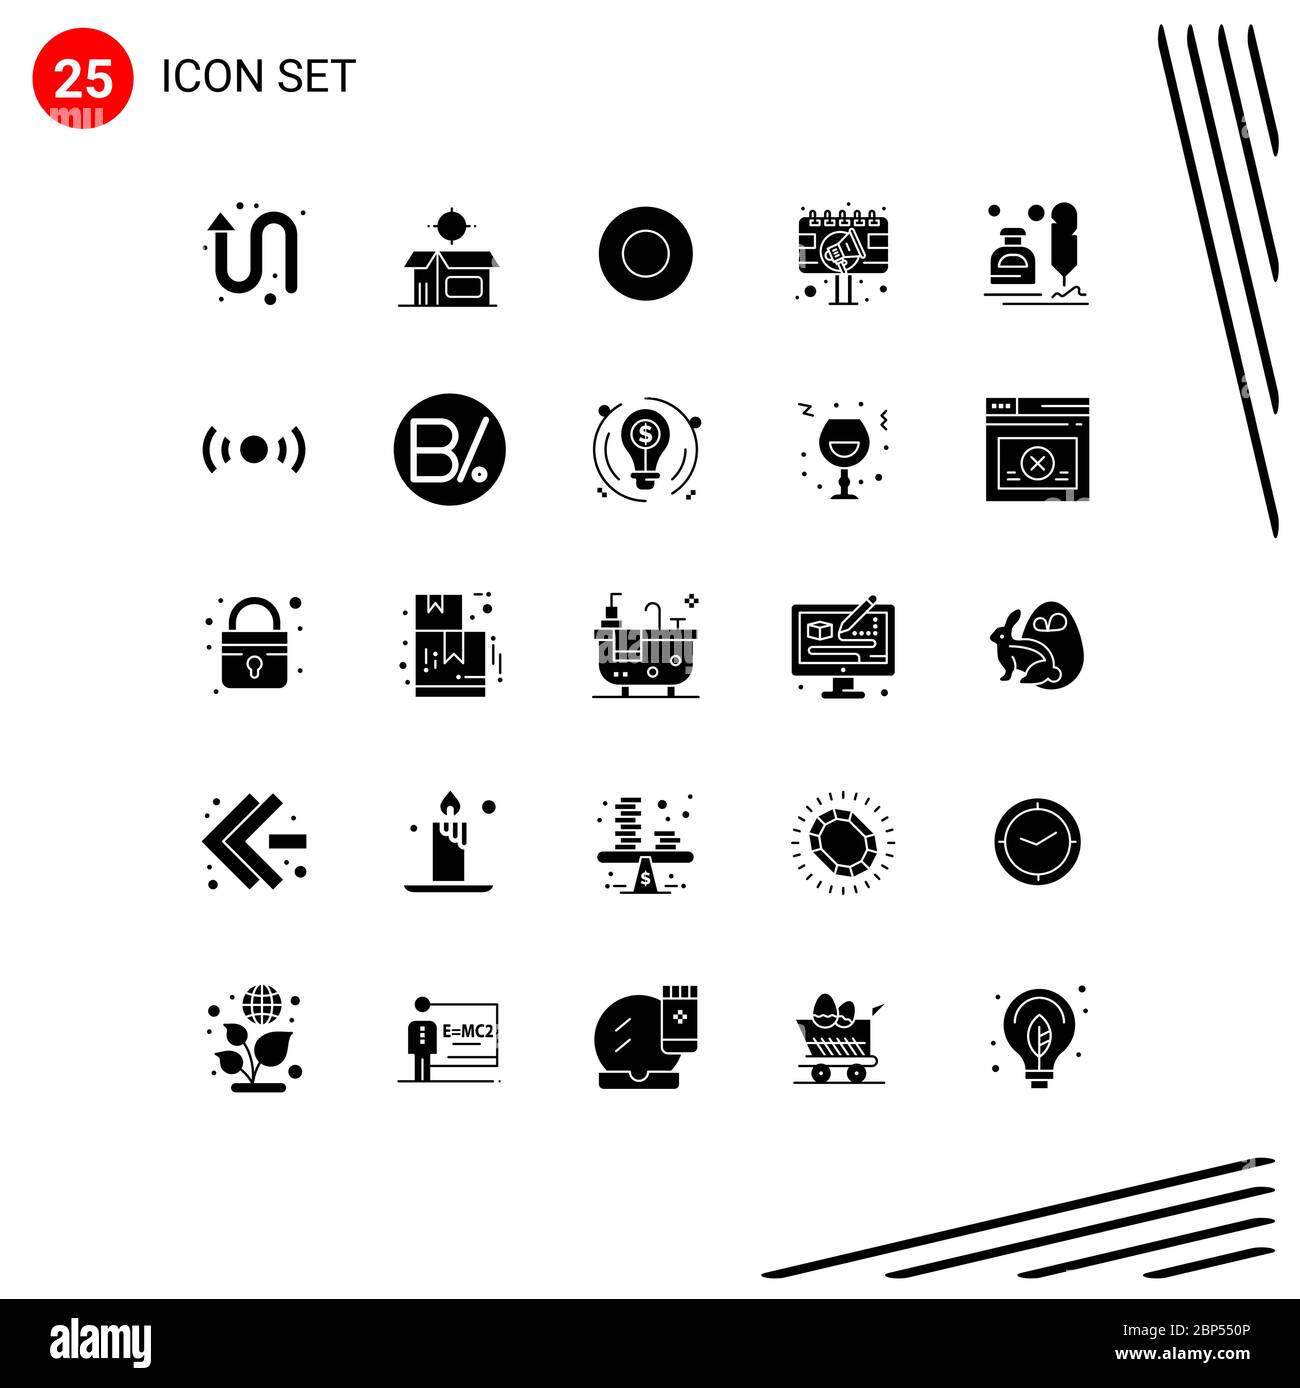 Set of 25 Modern UI Icons Symbols Signs for erite, sign board, dish, billboard, advertisement Editable Vector Design Elements Stock Vector